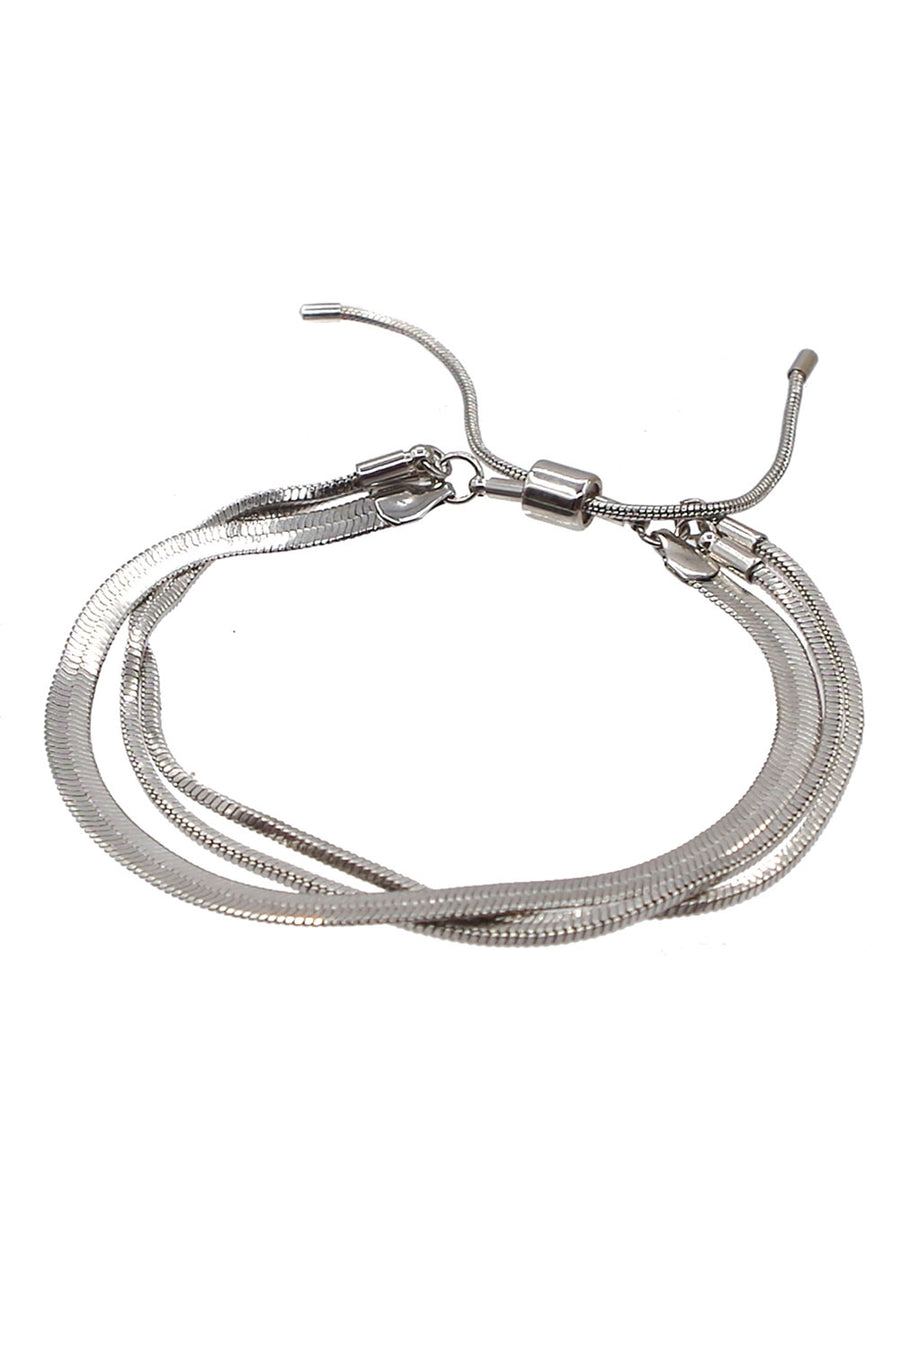 Women's Silver and Gold Herringbone Chain Bracelet - Vacay Land 